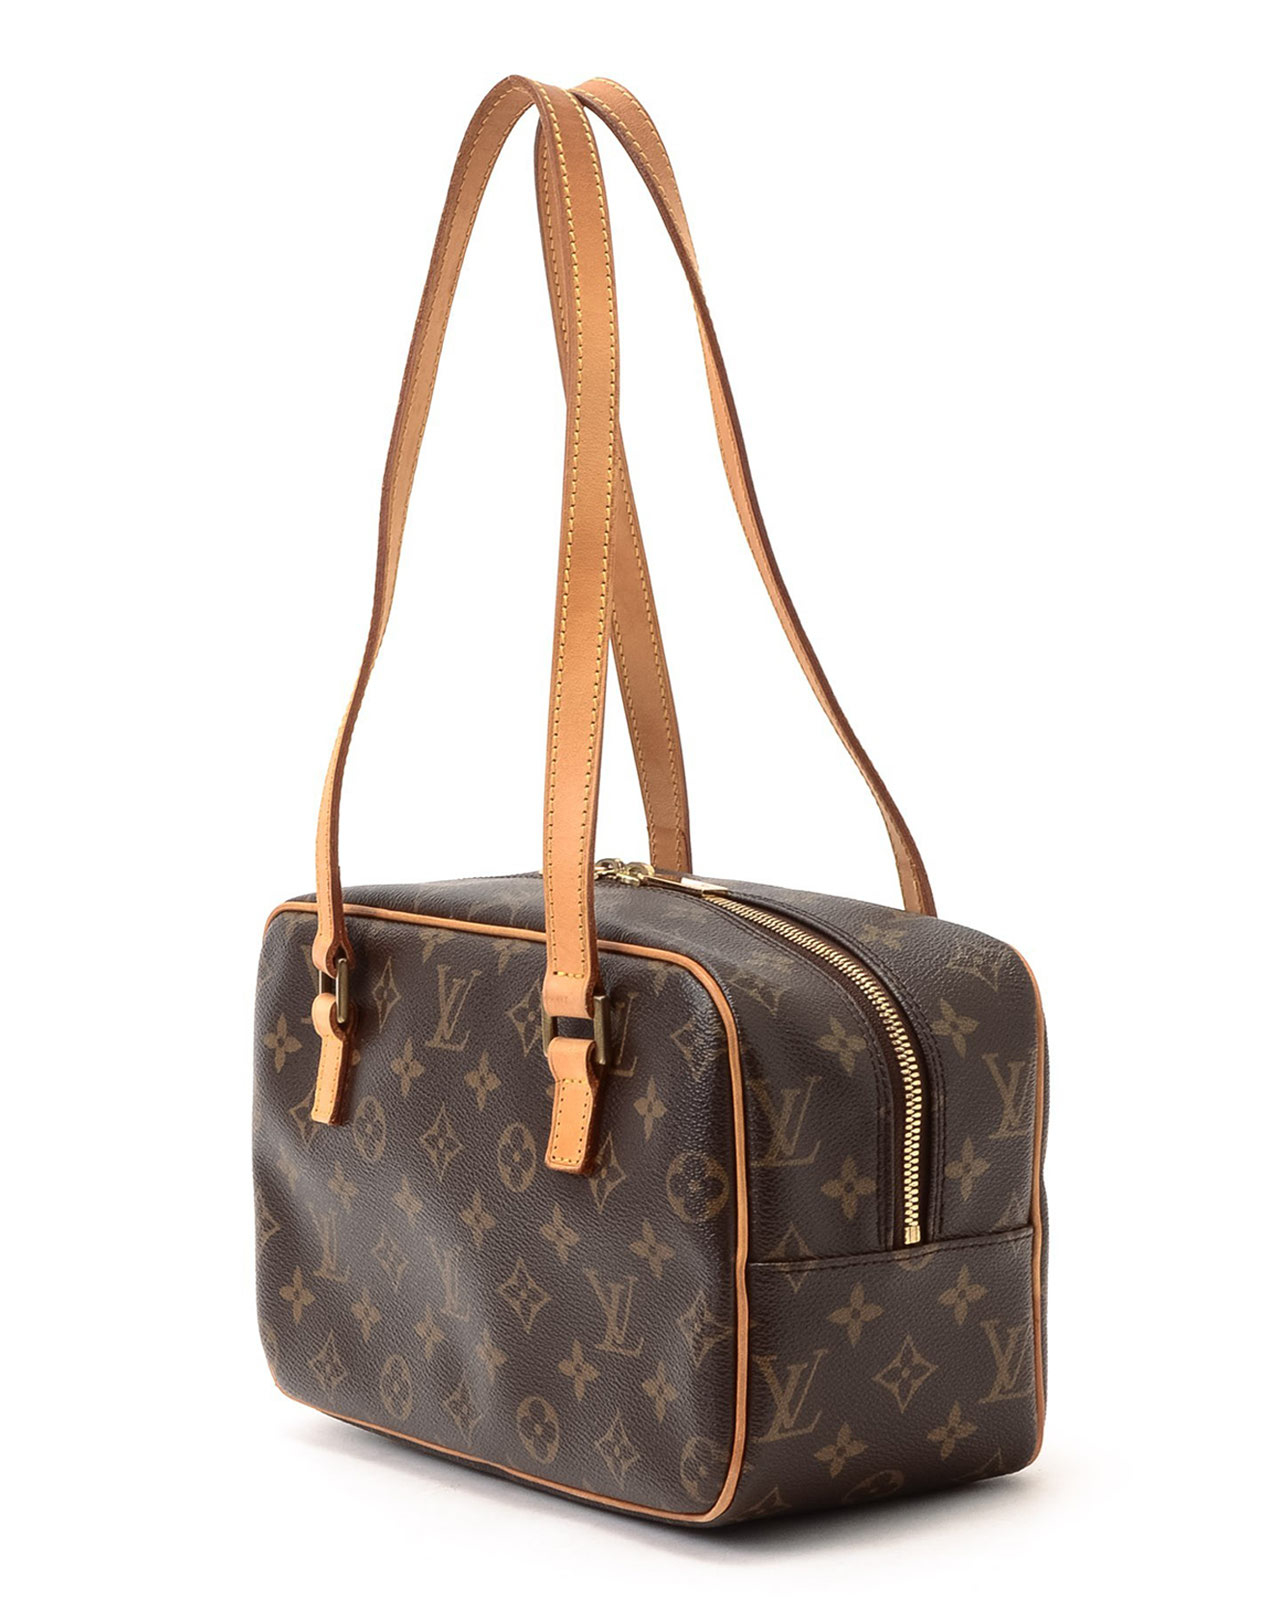 Louis Vuitton Cite Mm Shoulder Bag in Brown - Lyst